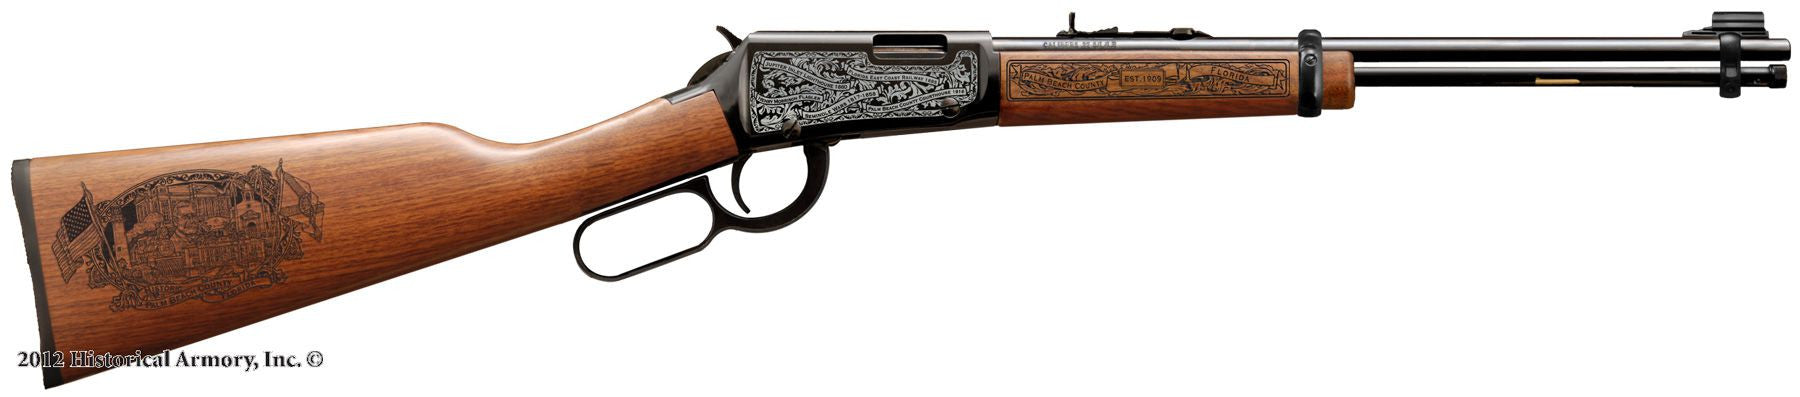 Palm Beach county florida engraved rifle H001